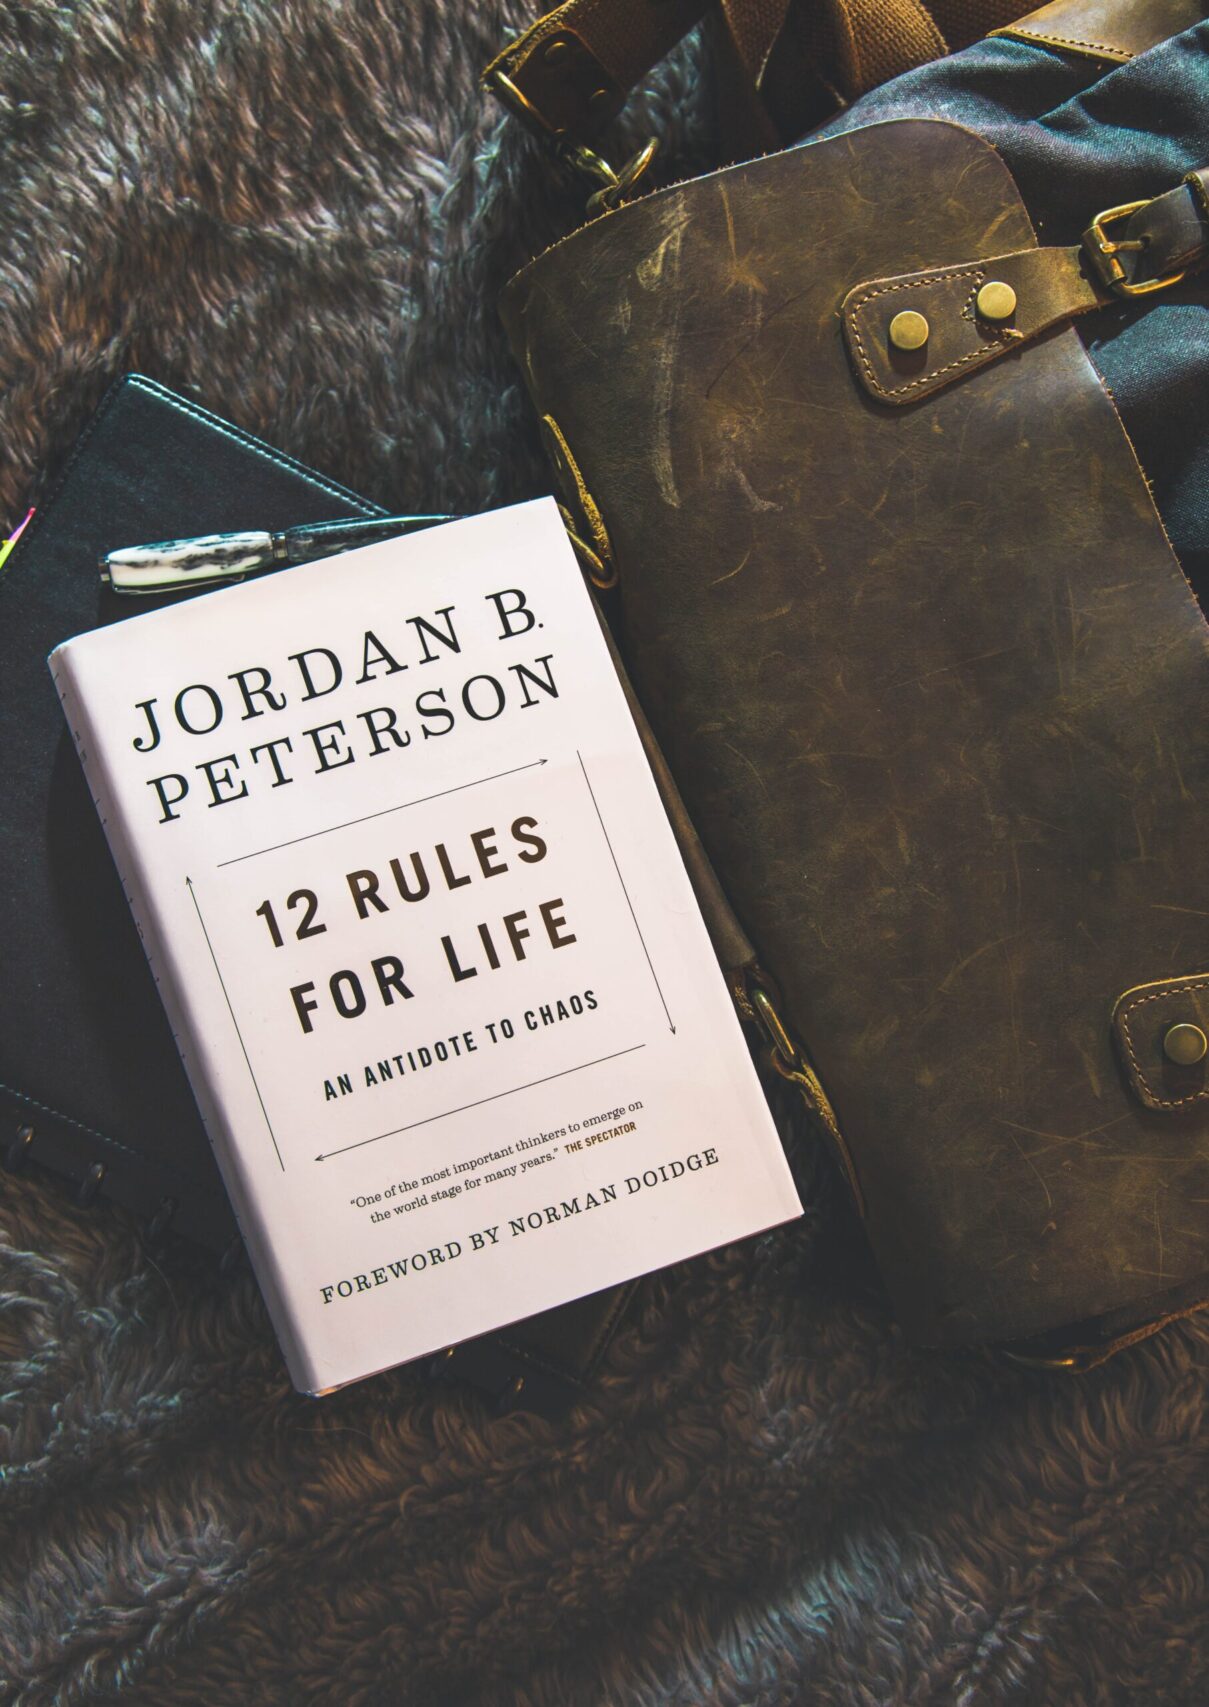 You are currently viewing 12 Κανόνες για τη ζωή: Το βιβλίο φαινόμενο!